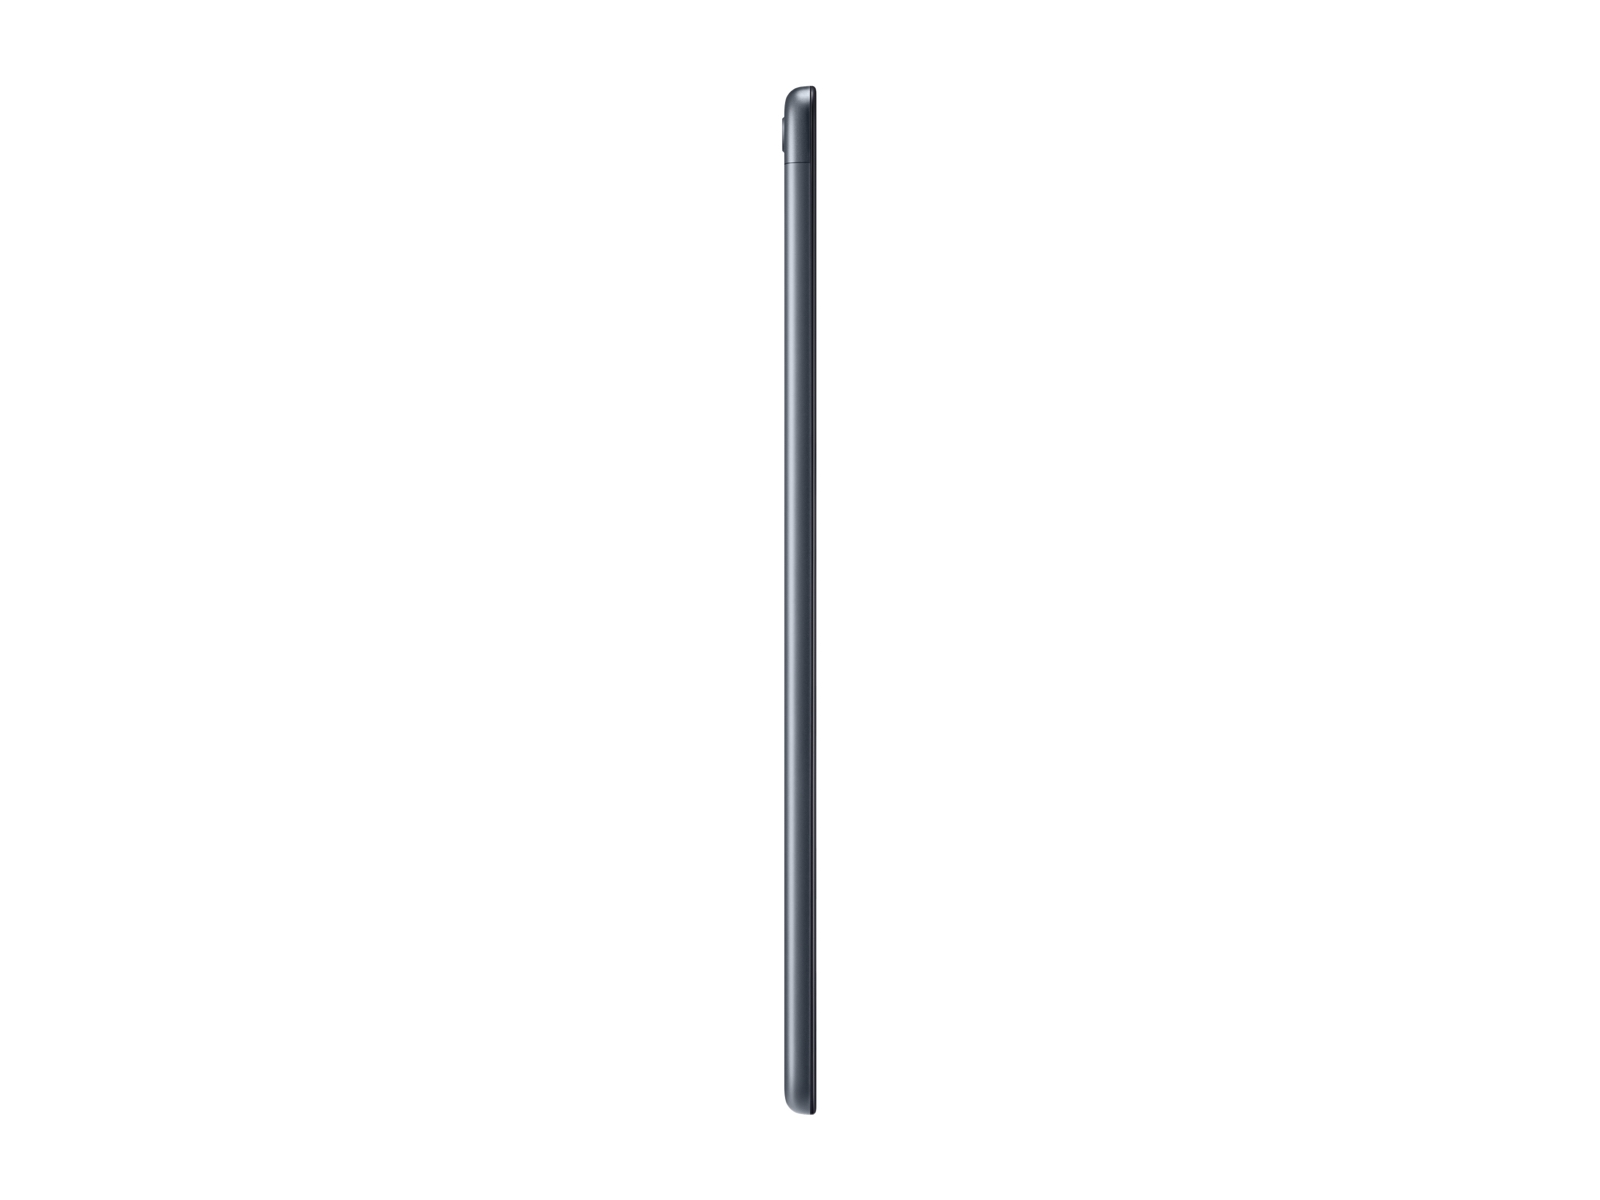 Thumbnail image of Galaxy Tab A 10.1 (2019), 128GB, Black (Wi-Fi)